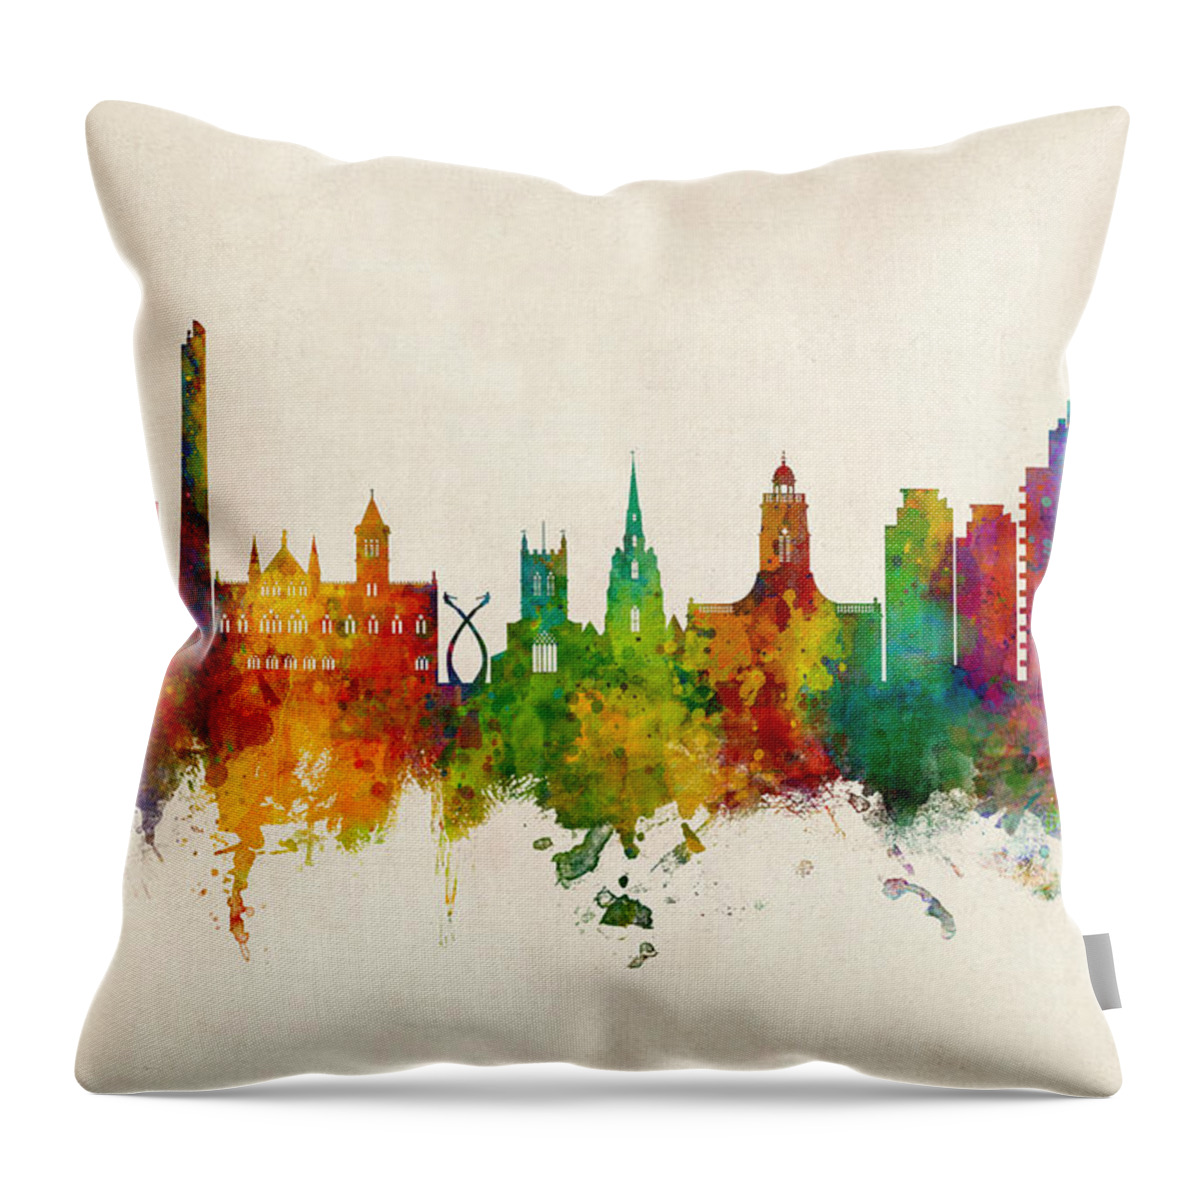 Northampton Throw Pillow featuring the digital art Northampton England Skyline by Michael Tompsett